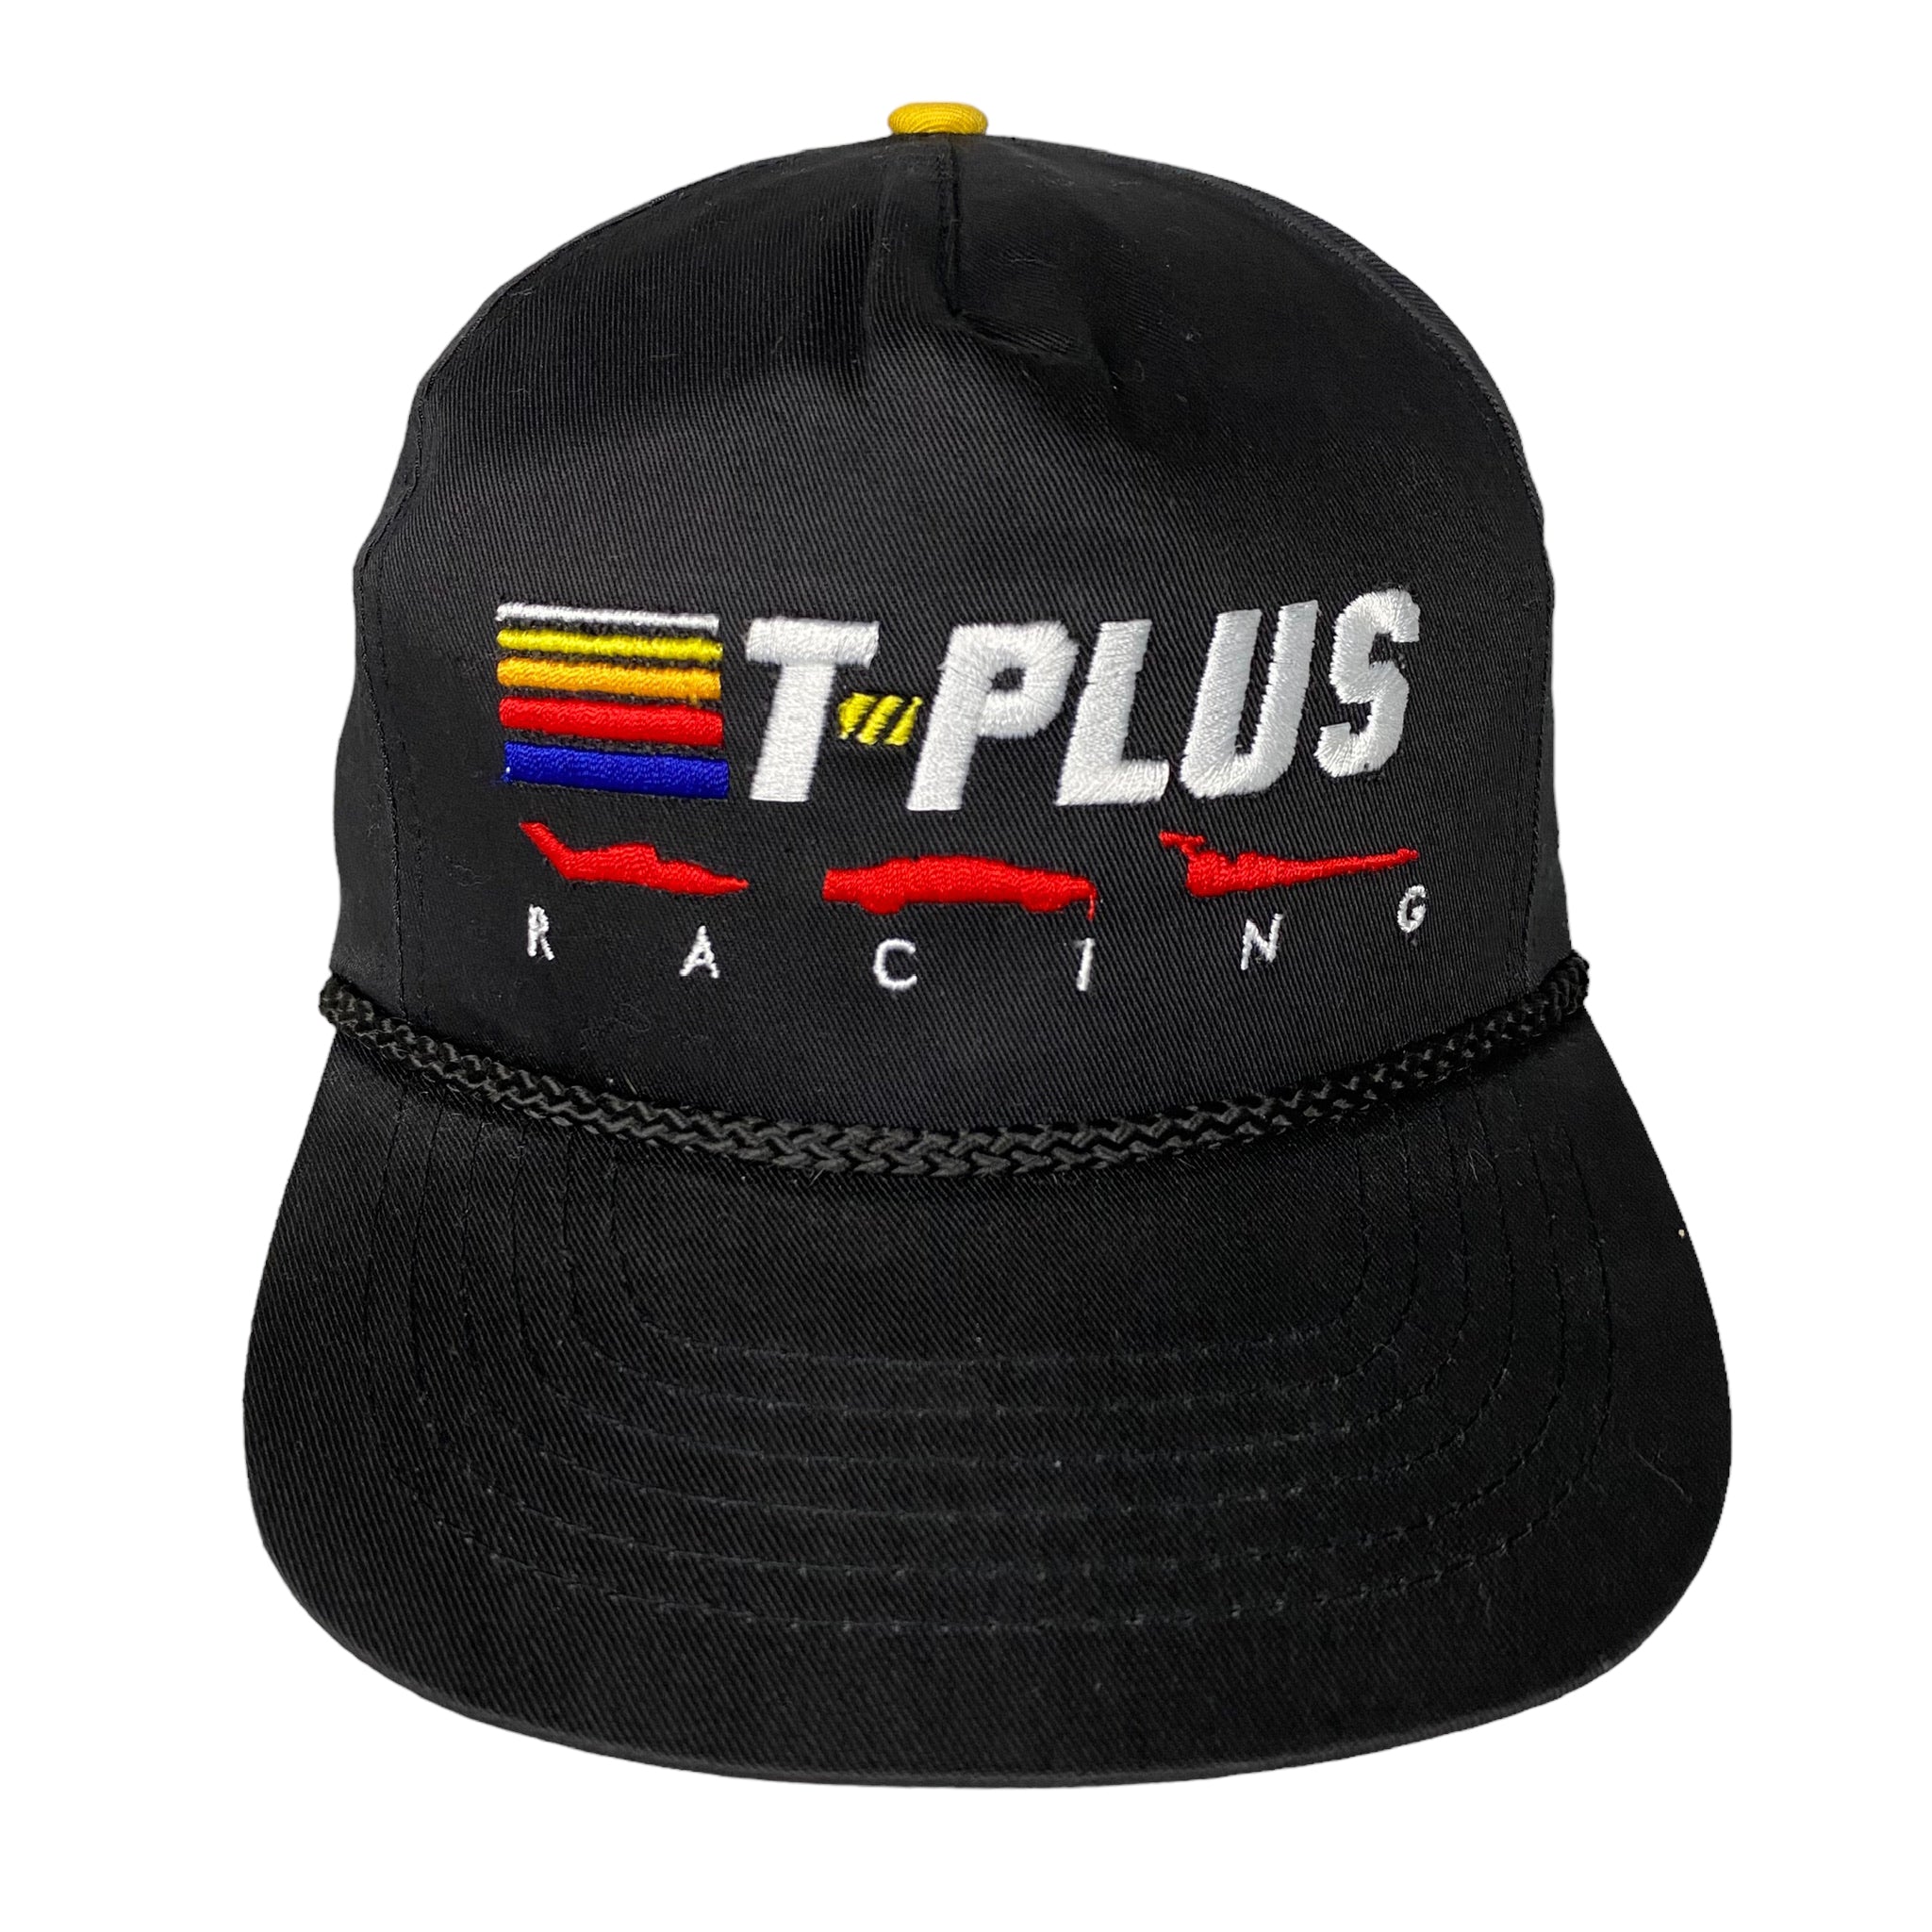 Vintage T-Plus Racing SnapBack